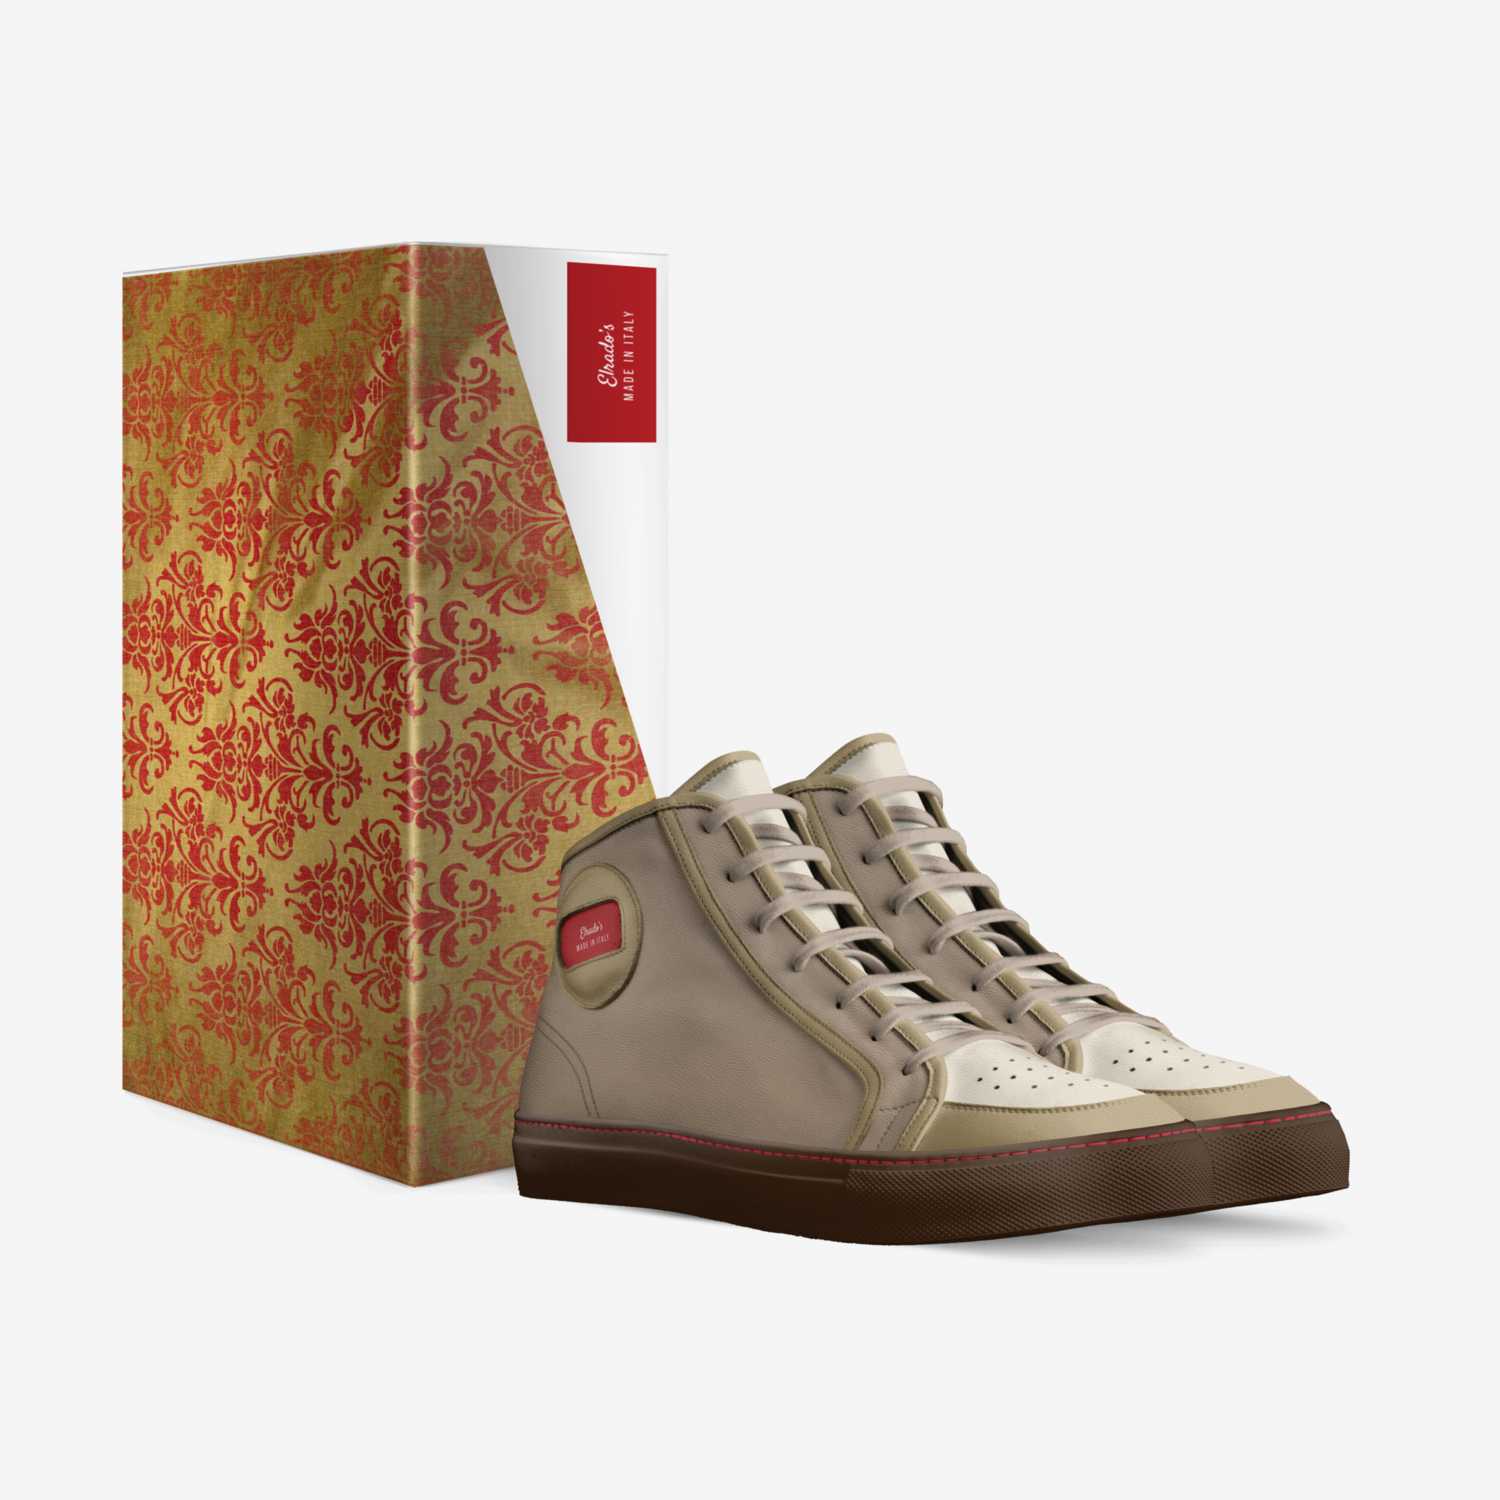 Elrado's custom made in Italy shoes by Elrado Telfer | Box view